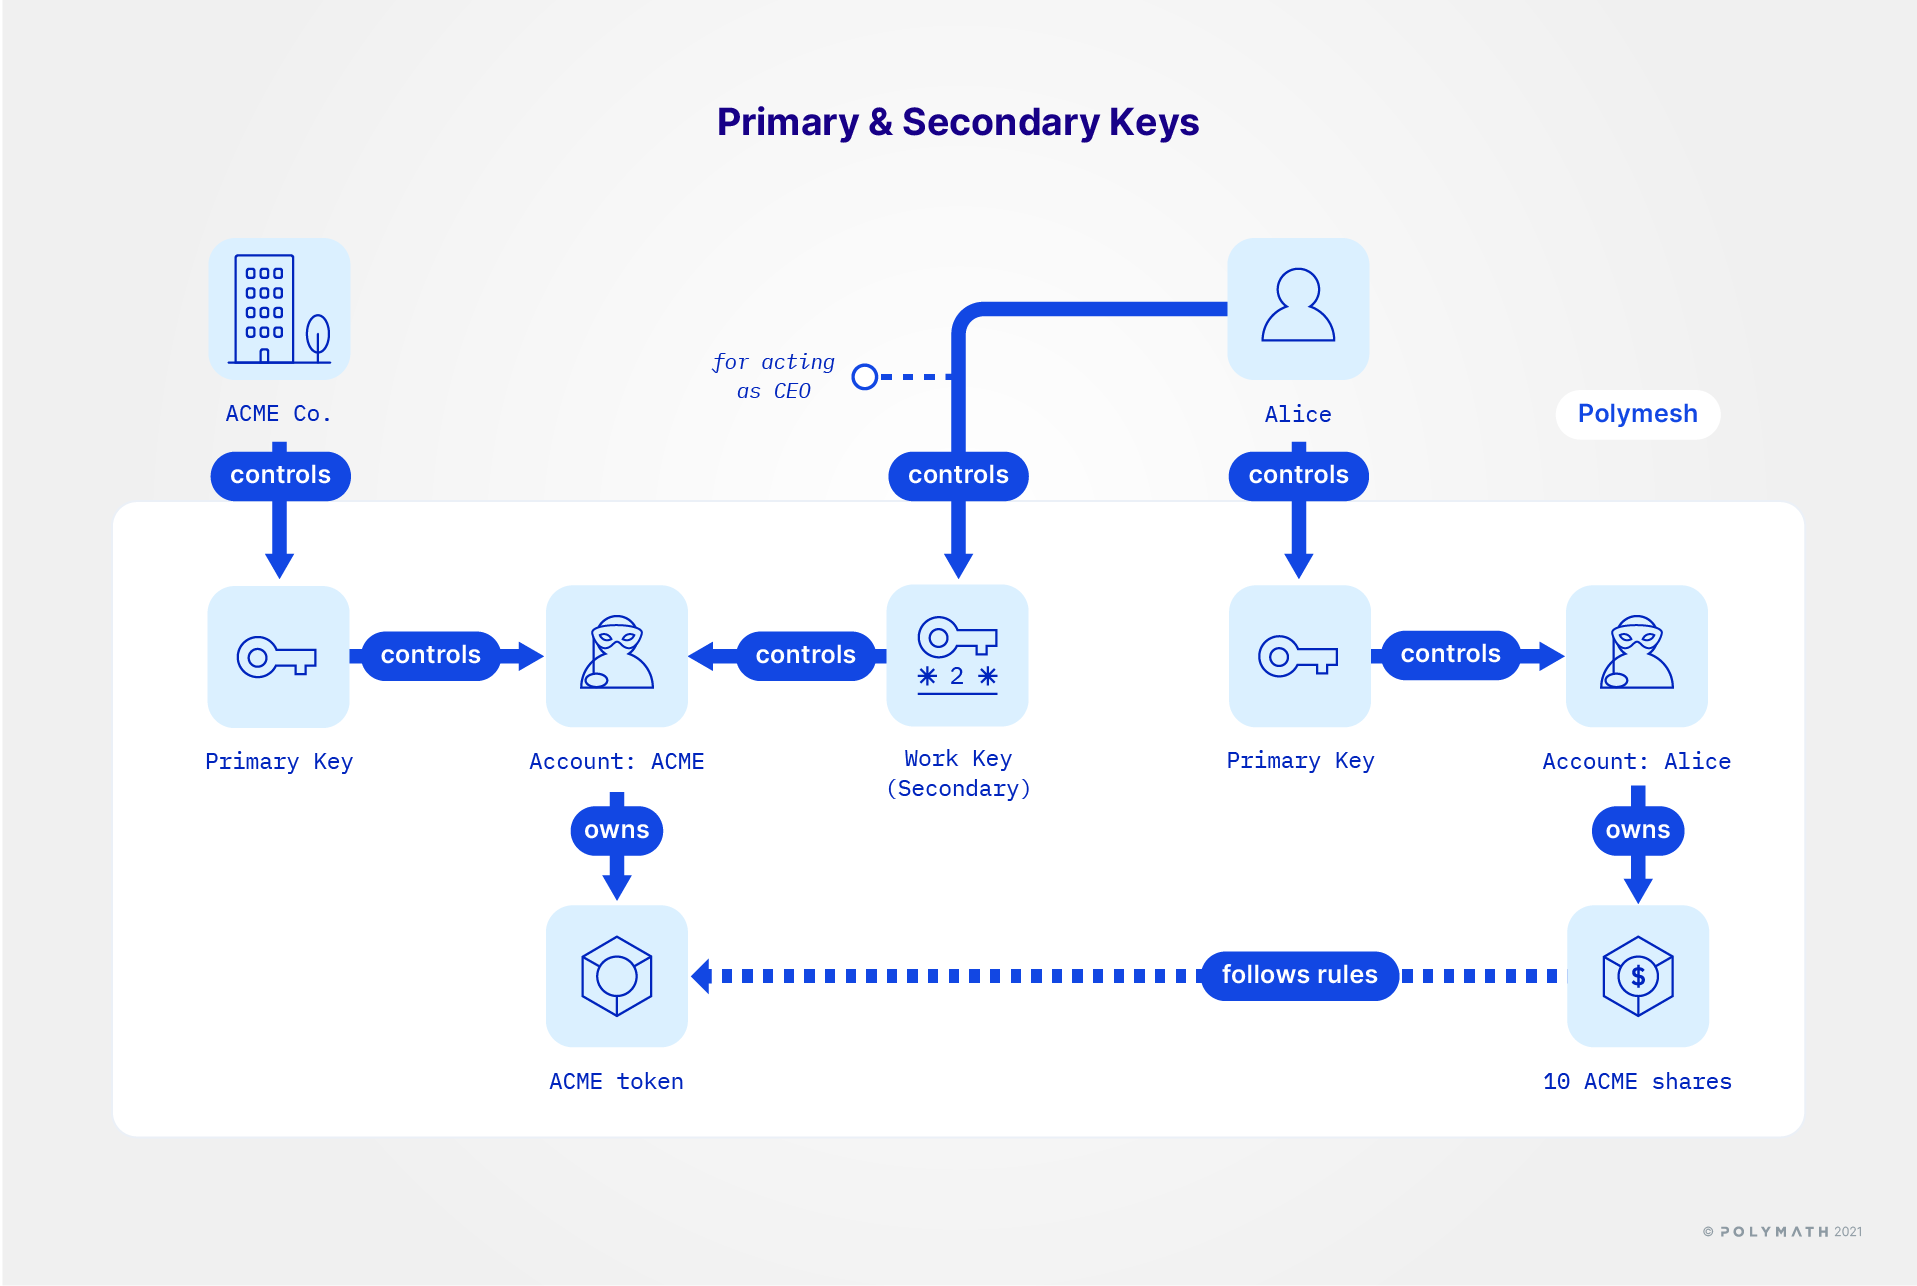 Alice and secondary keys